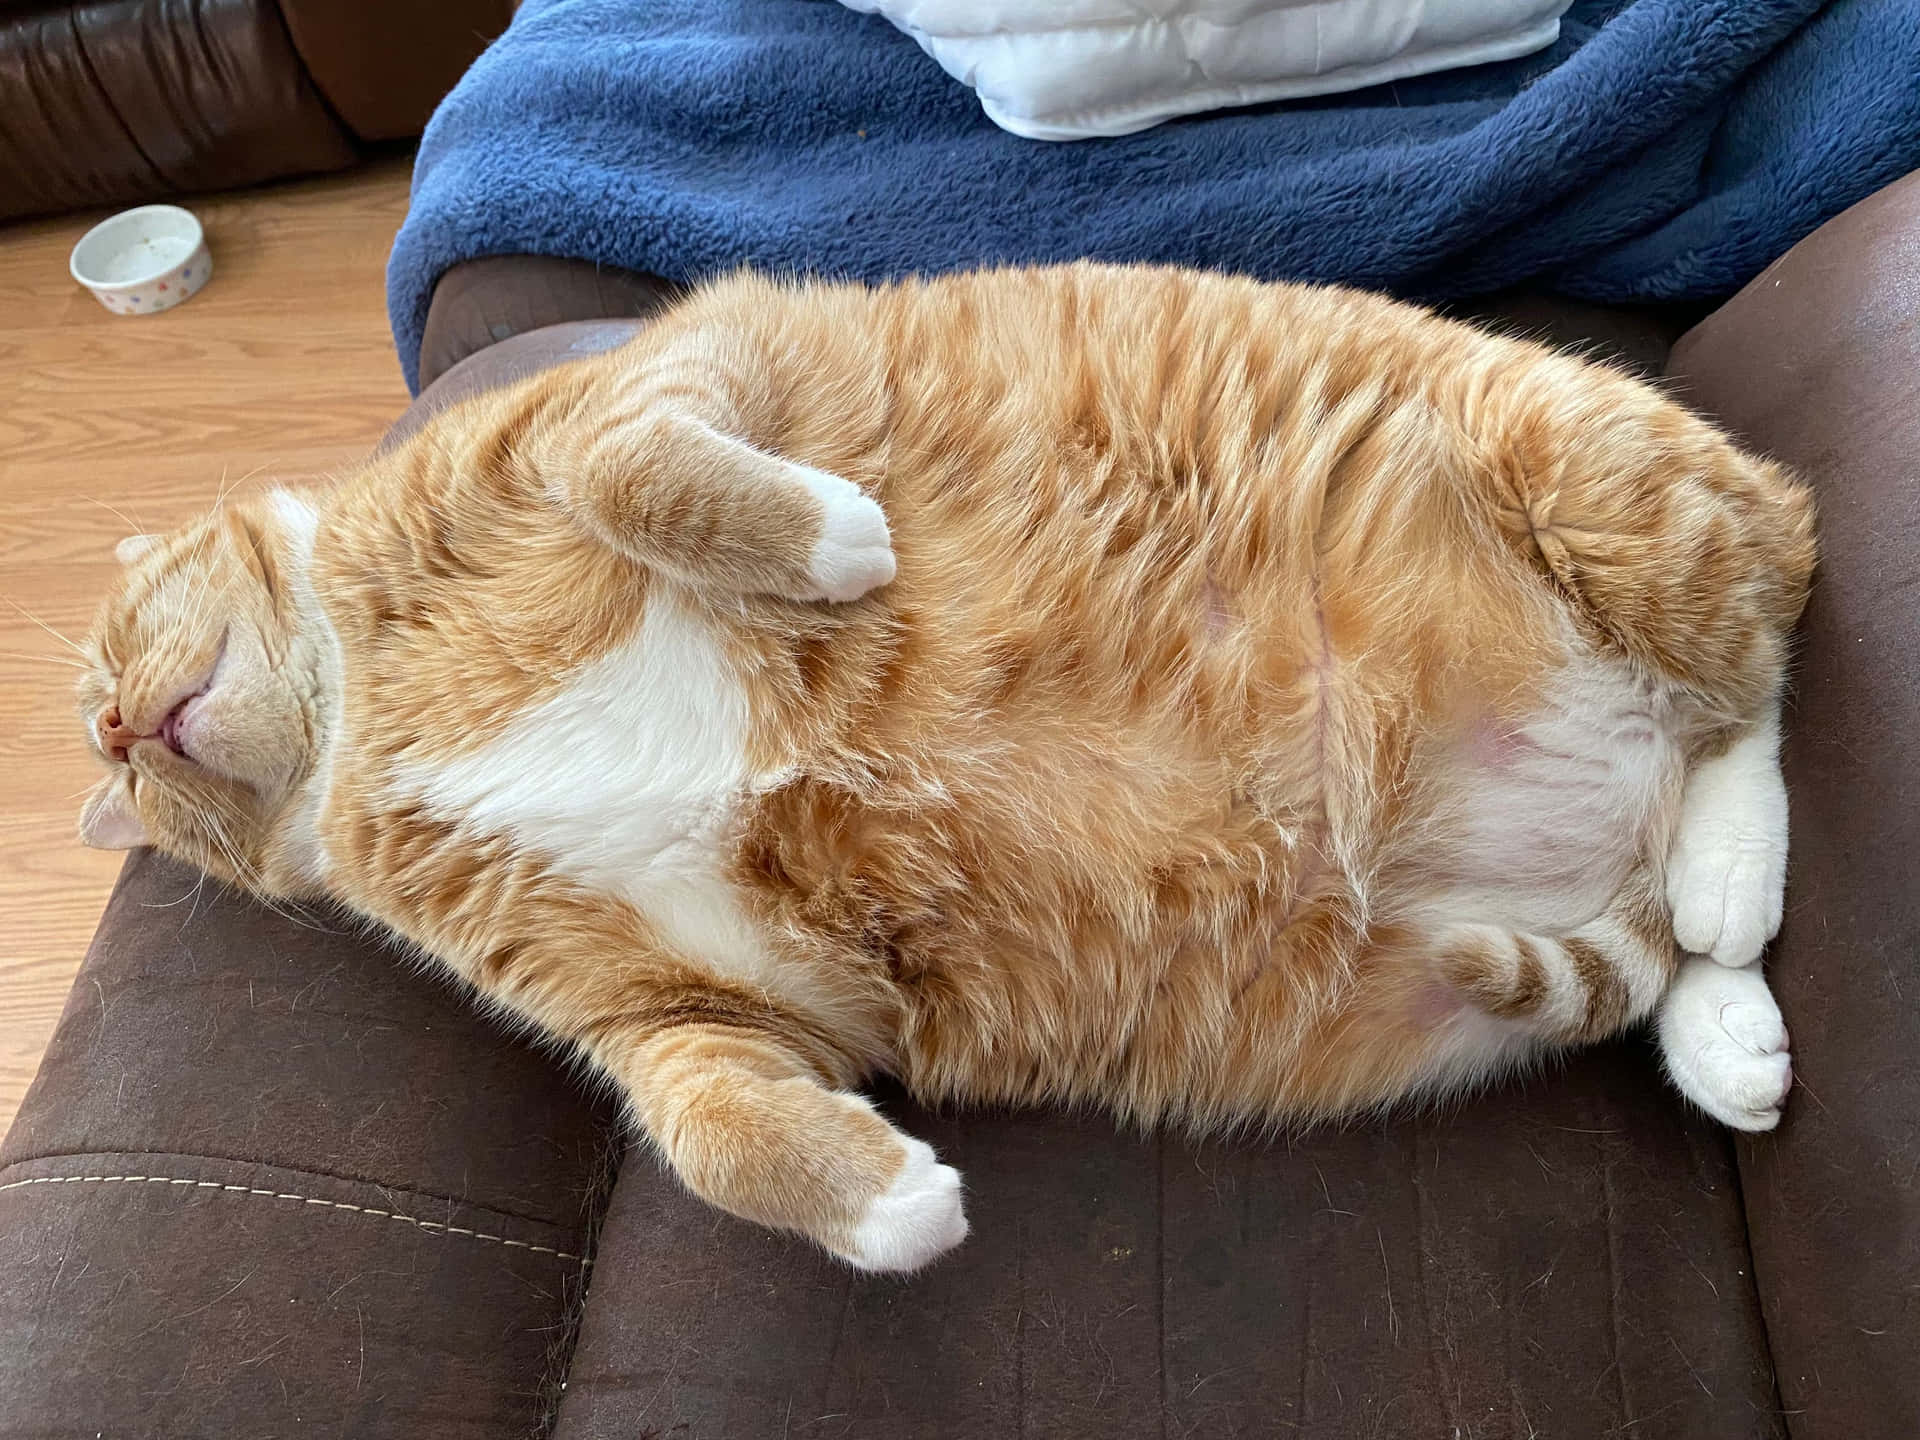 A happy, round fat cat enjoying a sunny window seat Wallpaper